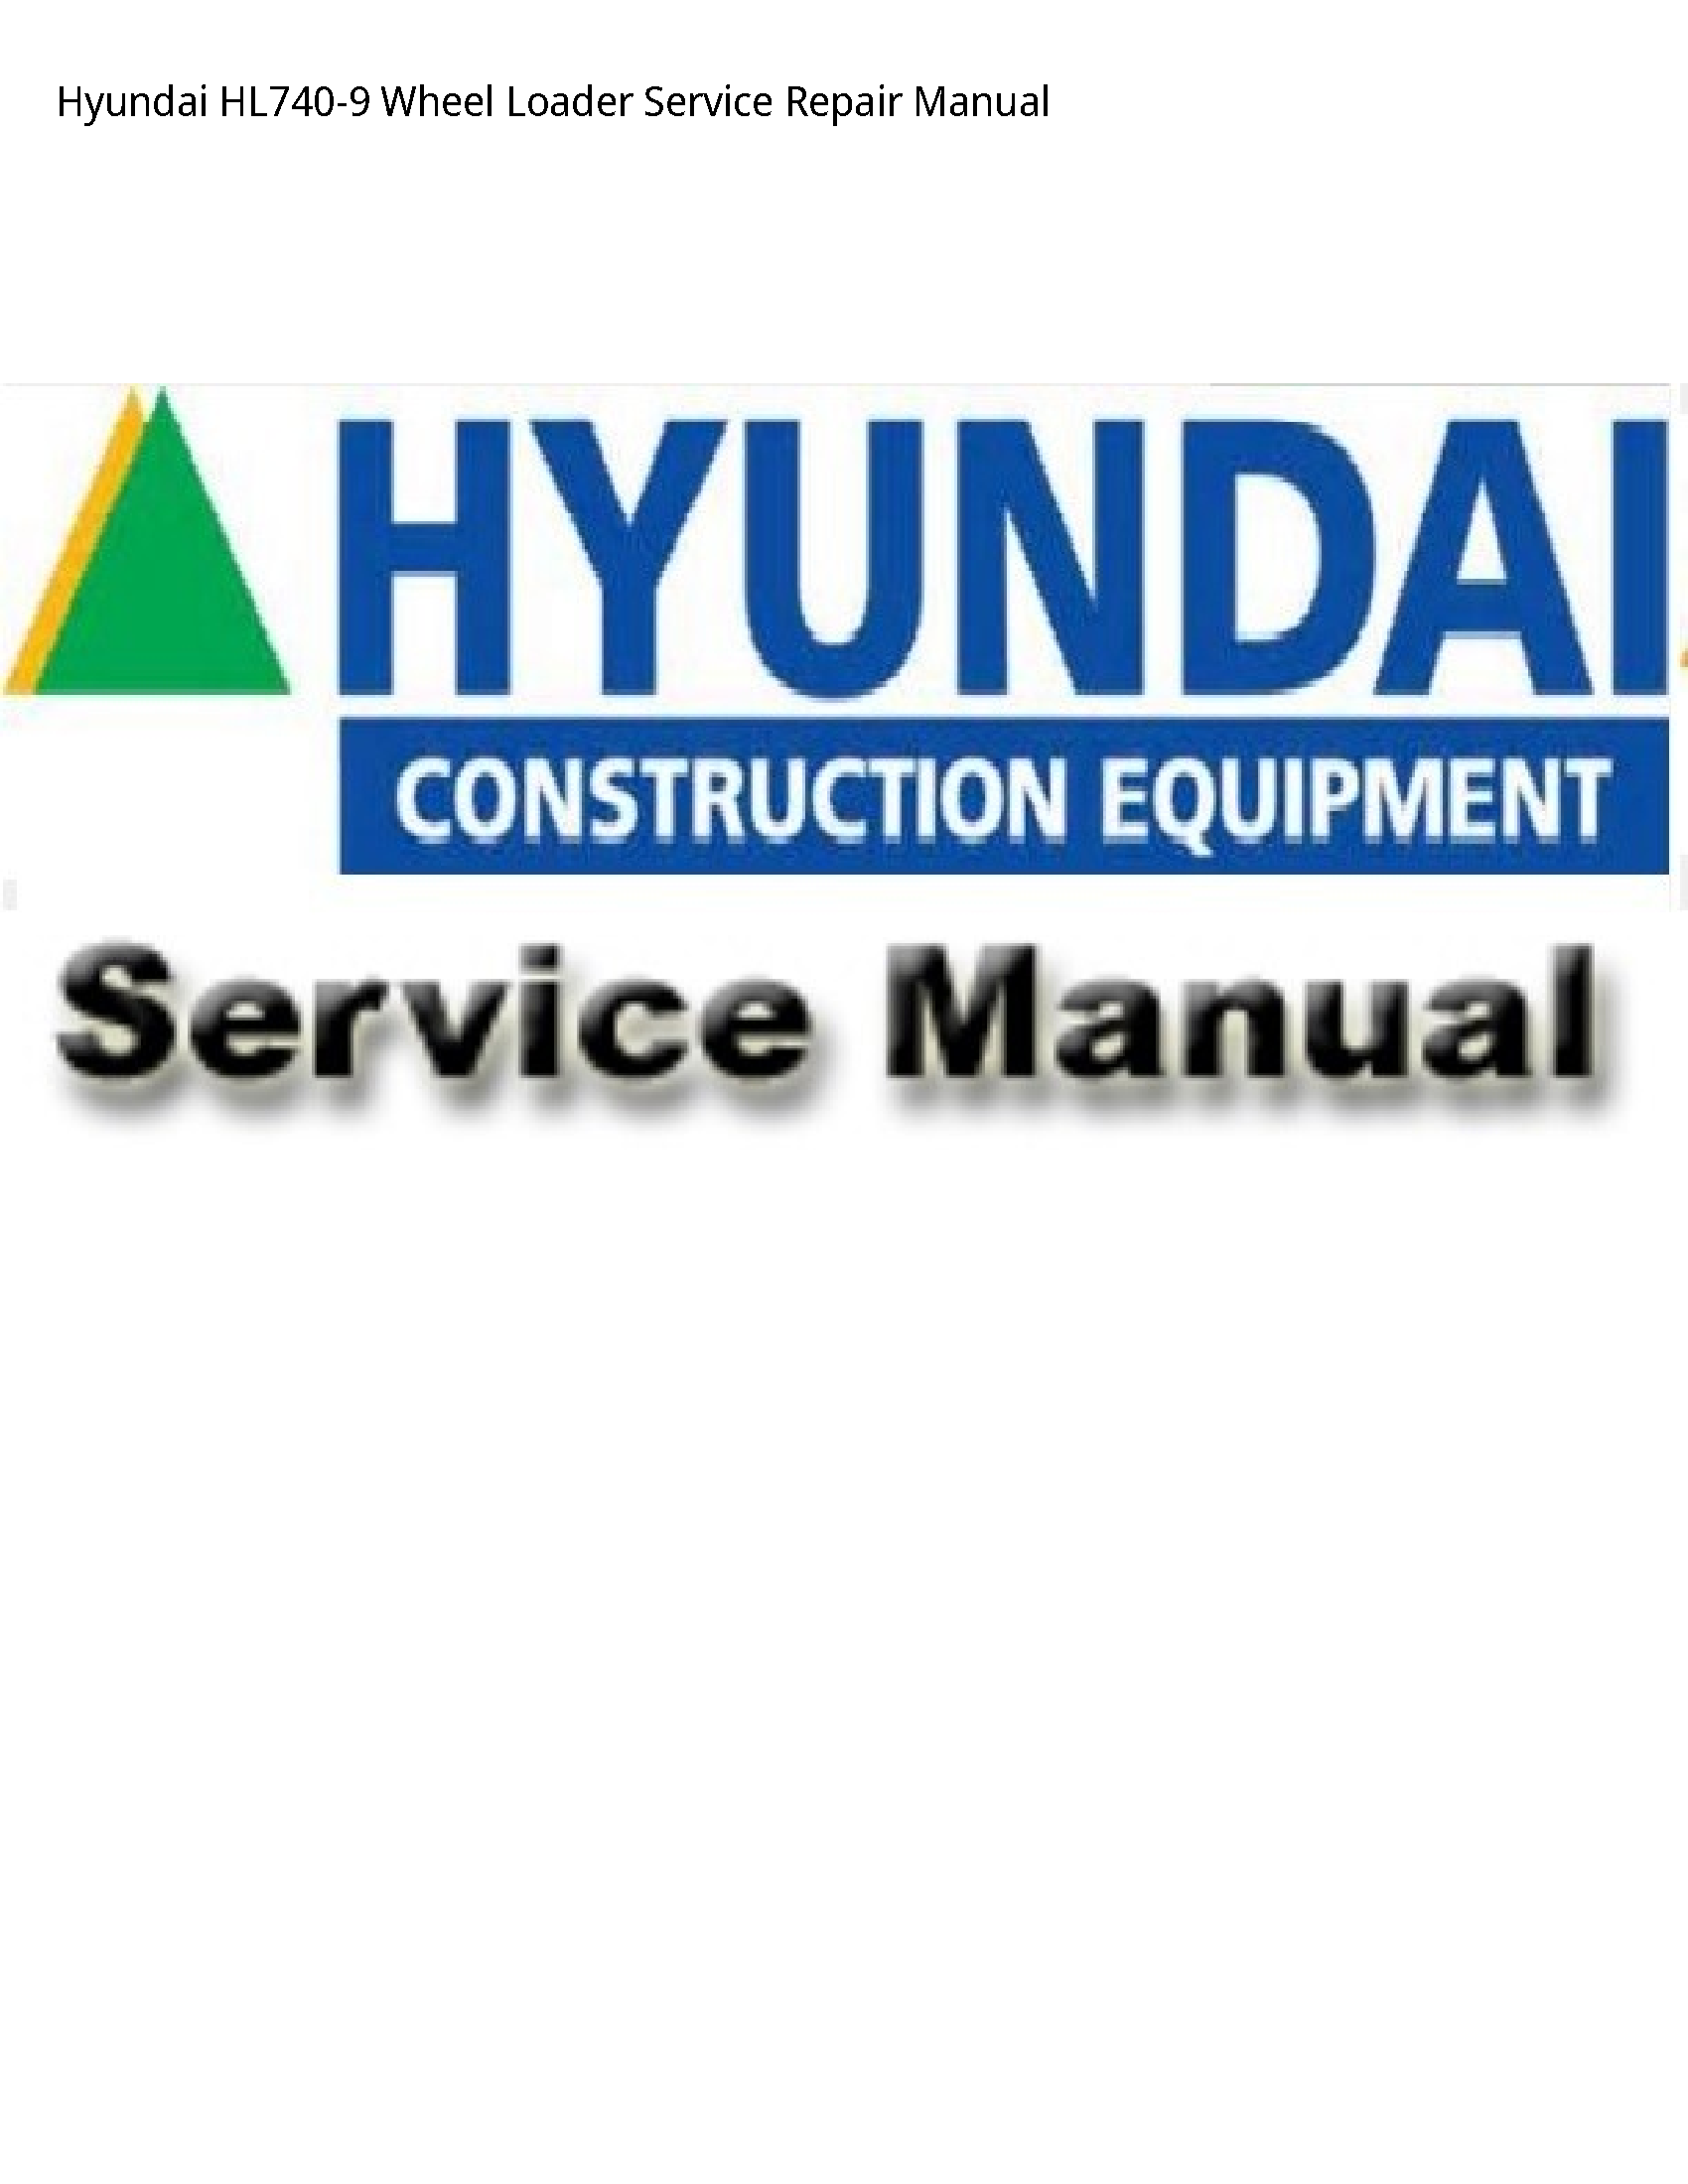 Hyundai HL740-9 Wheel Loader manual